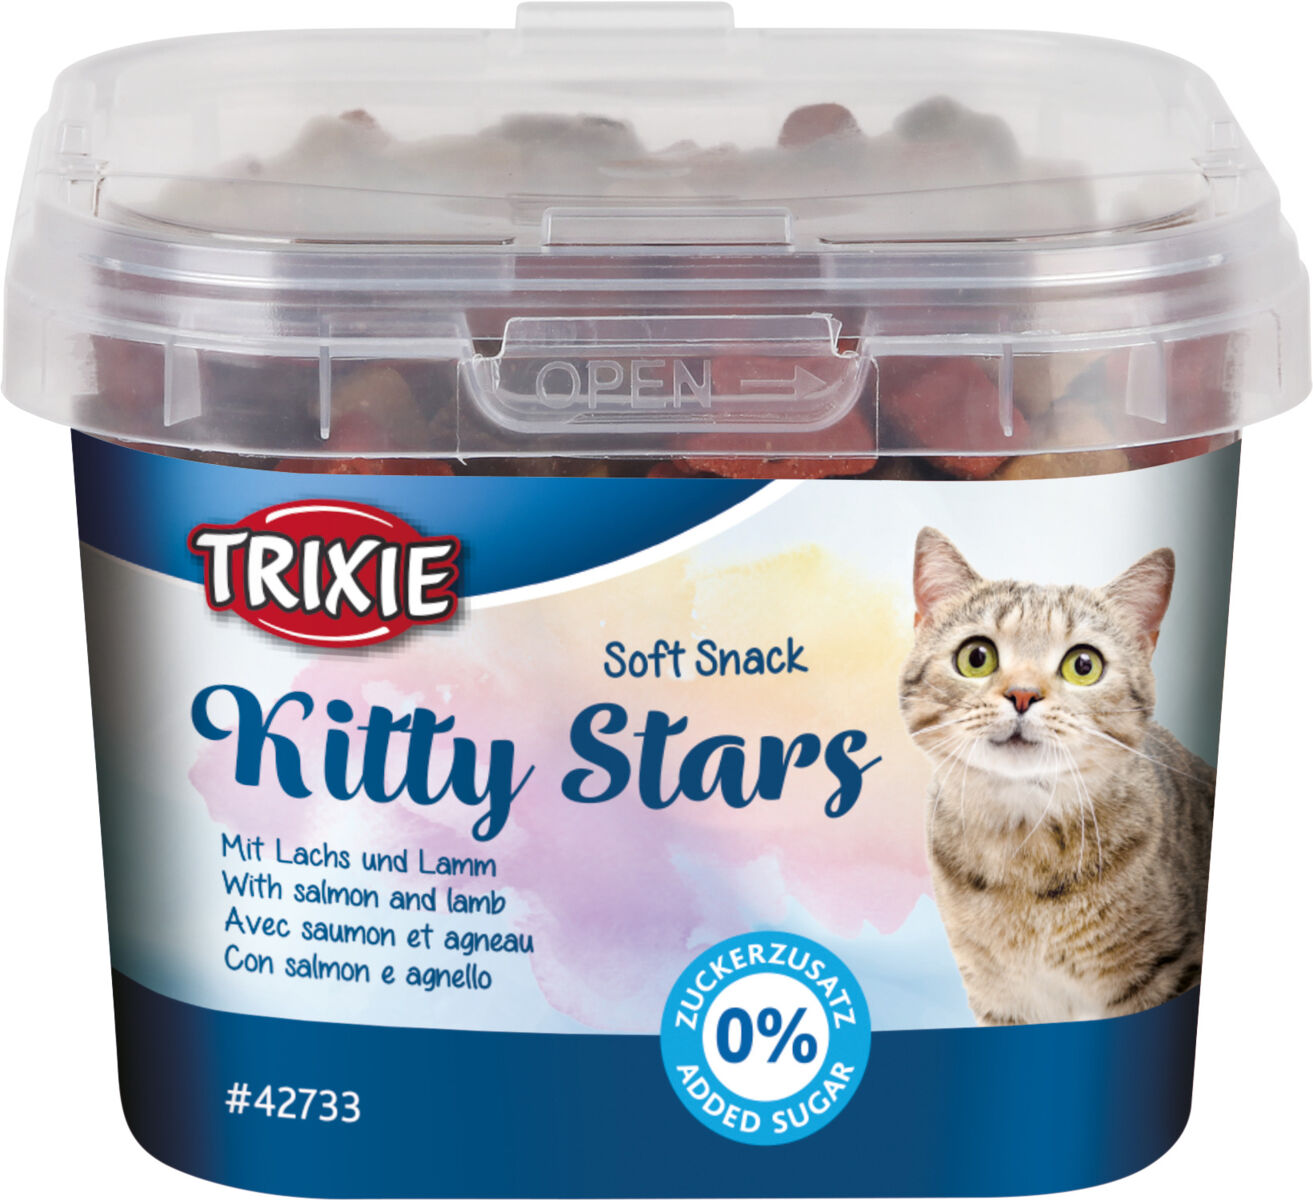 Trixie Soft Snack Kitty Stars, 140 g